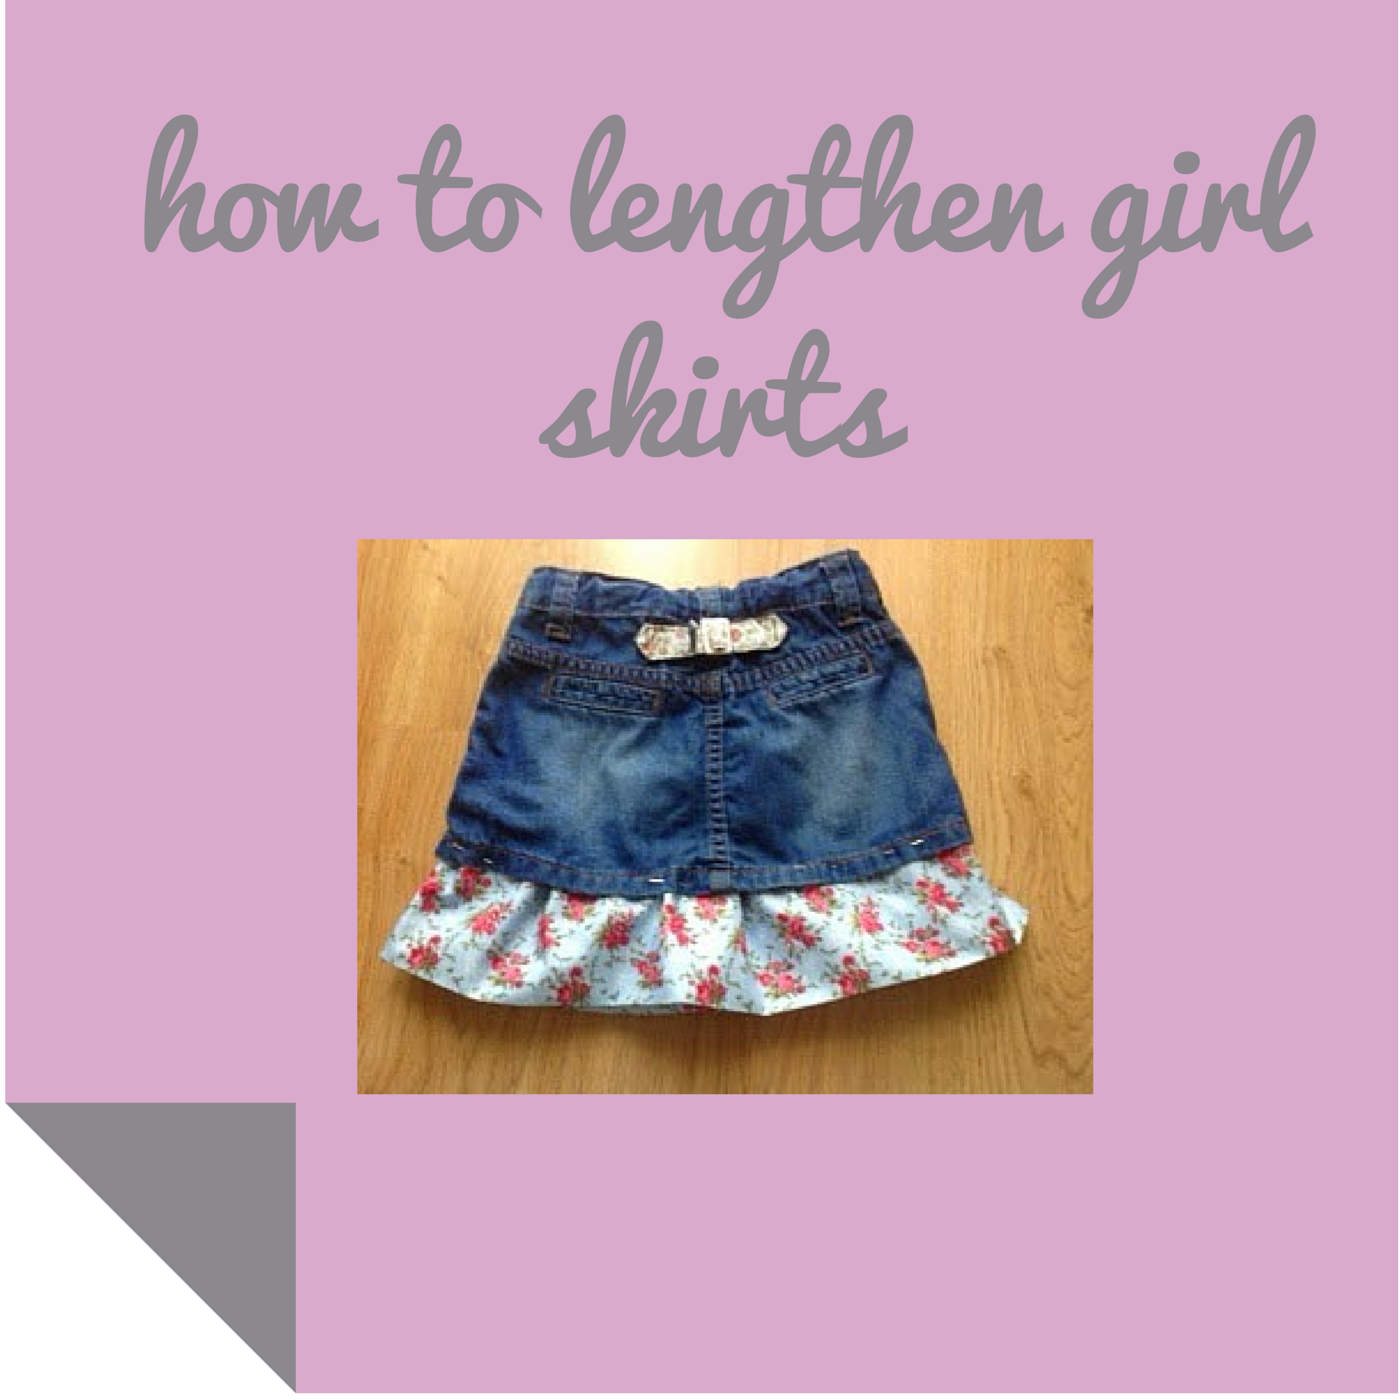 http://keepingitrreal.blogspot.com.es/2015/01/reuse-upcycle-how-to-lenghten-girls.html